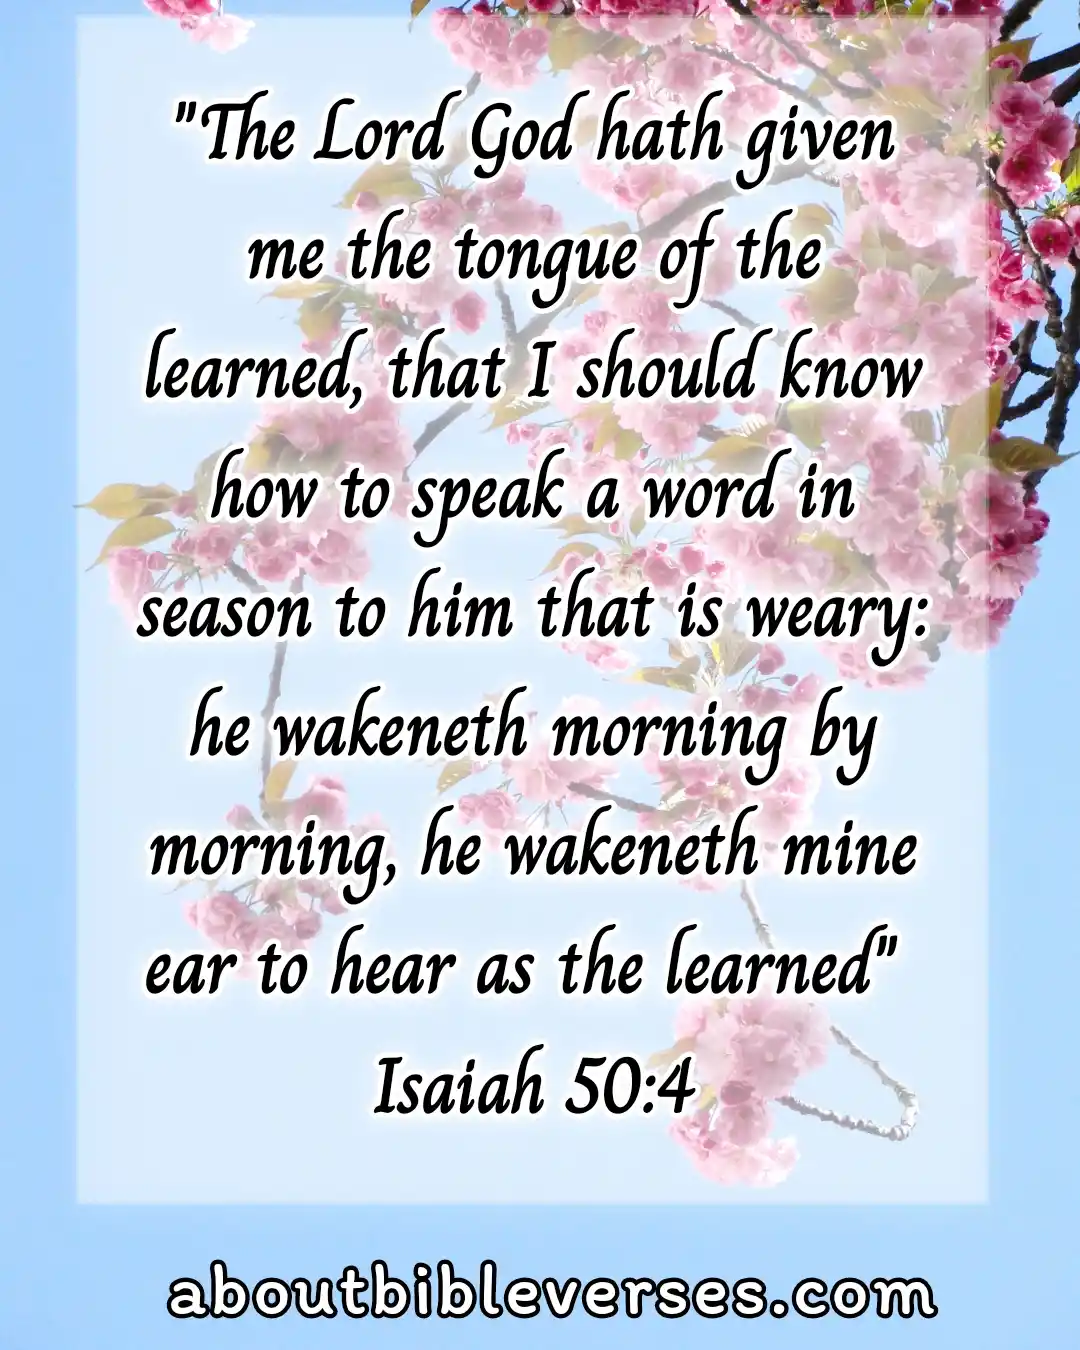 Good morning bible verses (Isaiah 50:4)